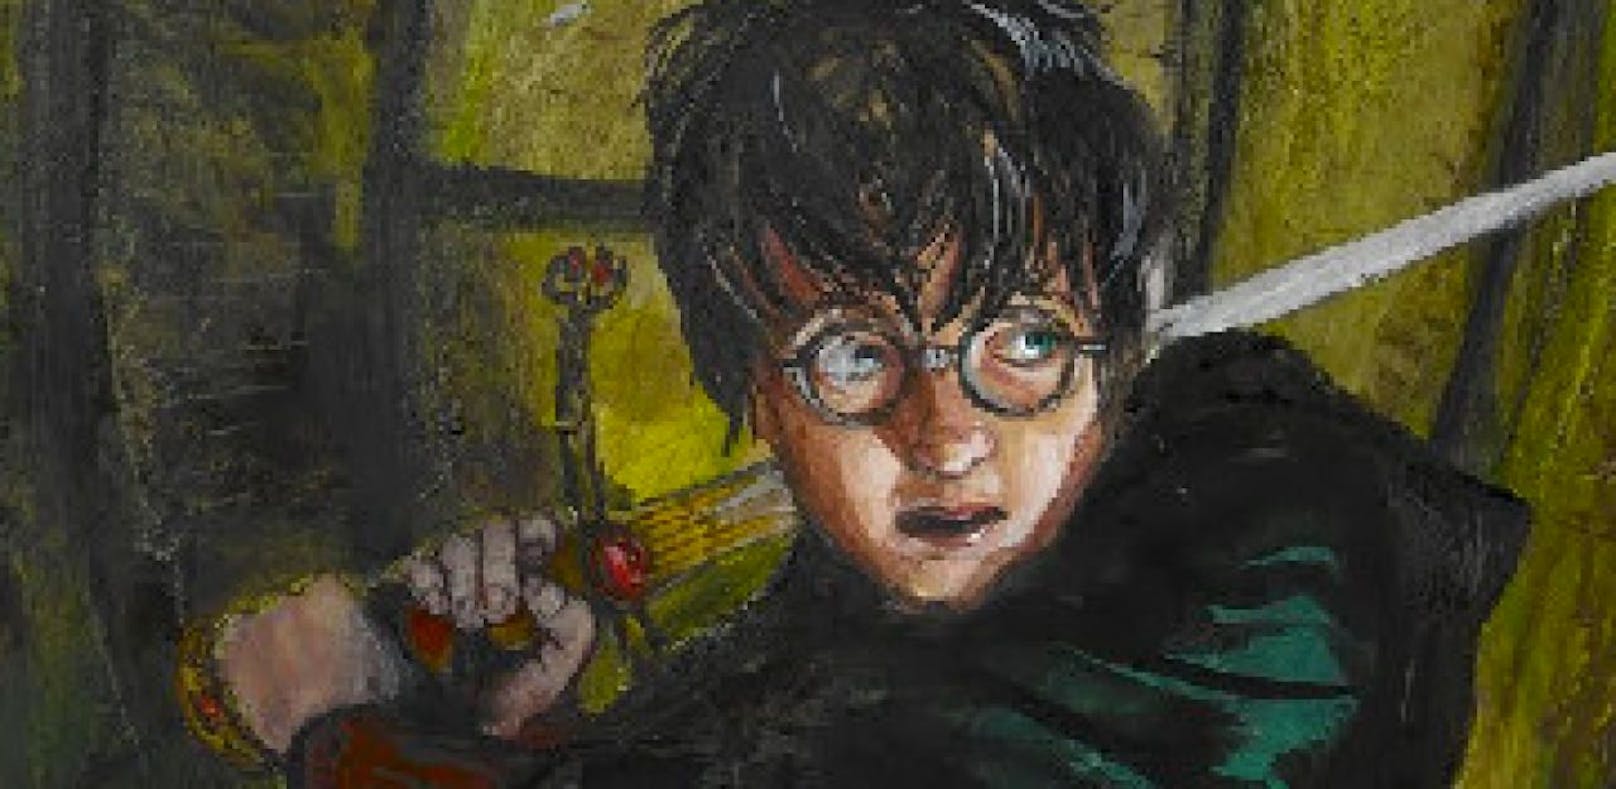 Harry Potters Geheimnisse sind ab sofort online